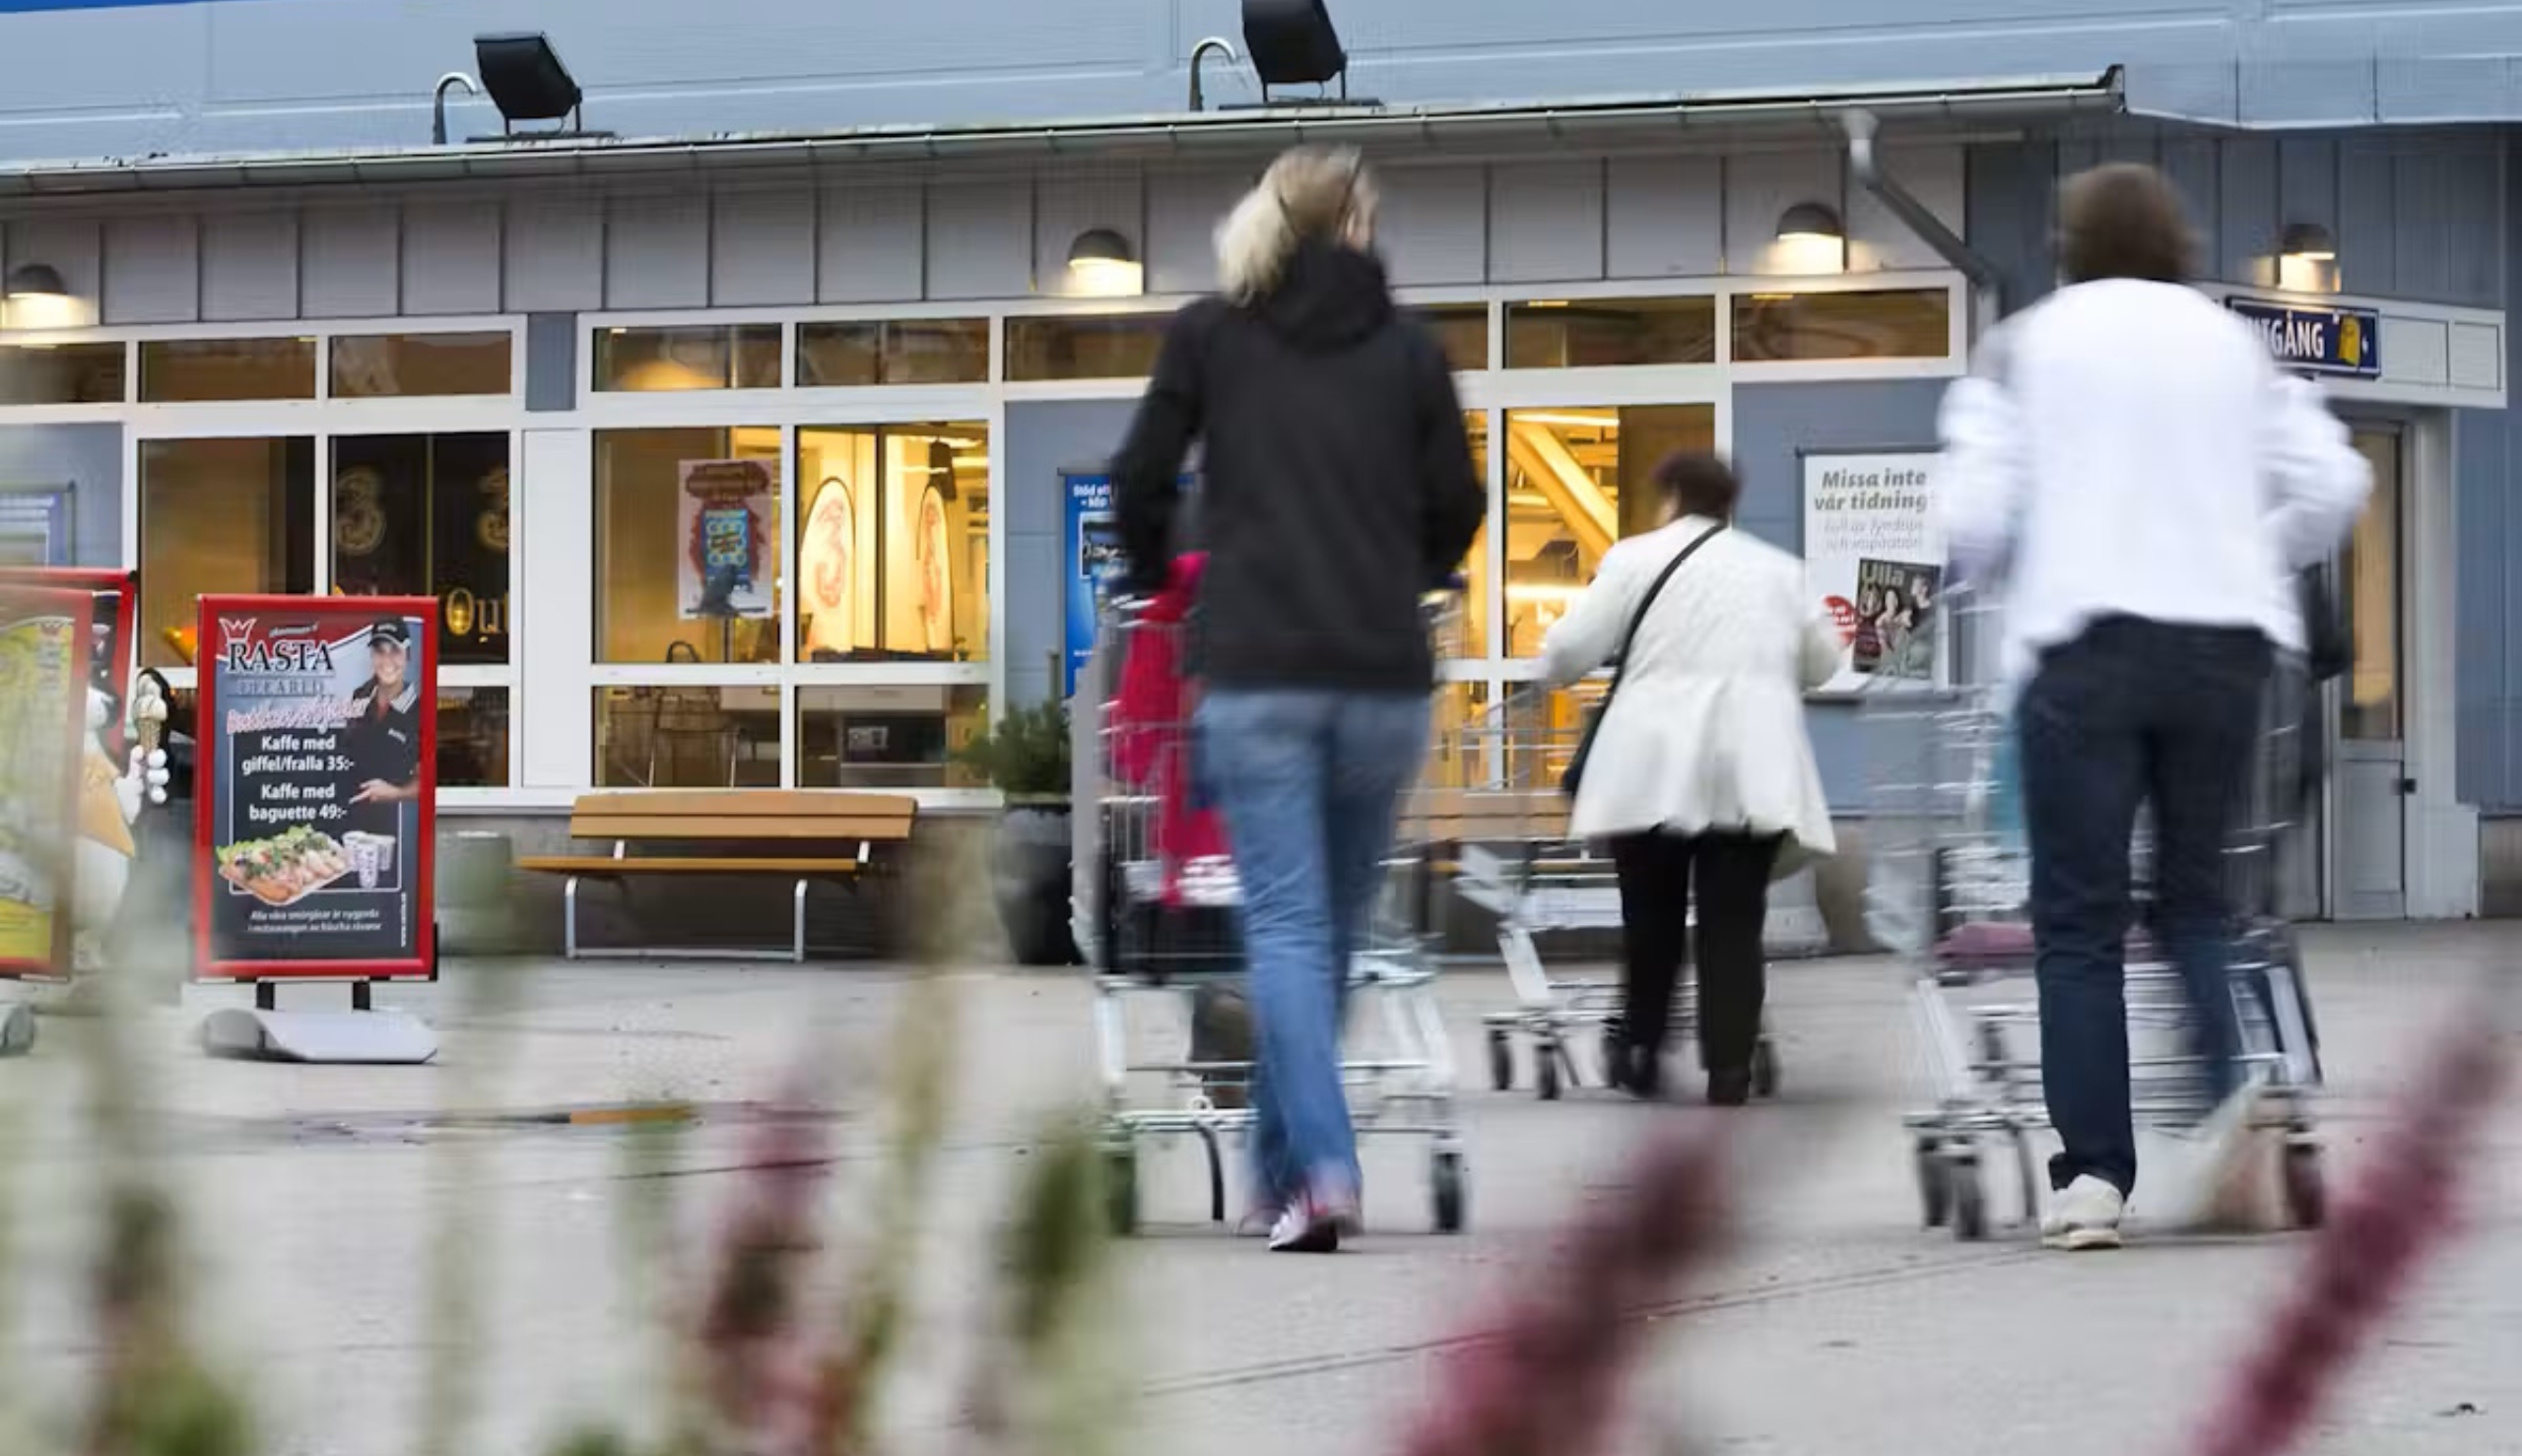 Many people come to Gekåsbyn to shop at Gekås in Ullared.